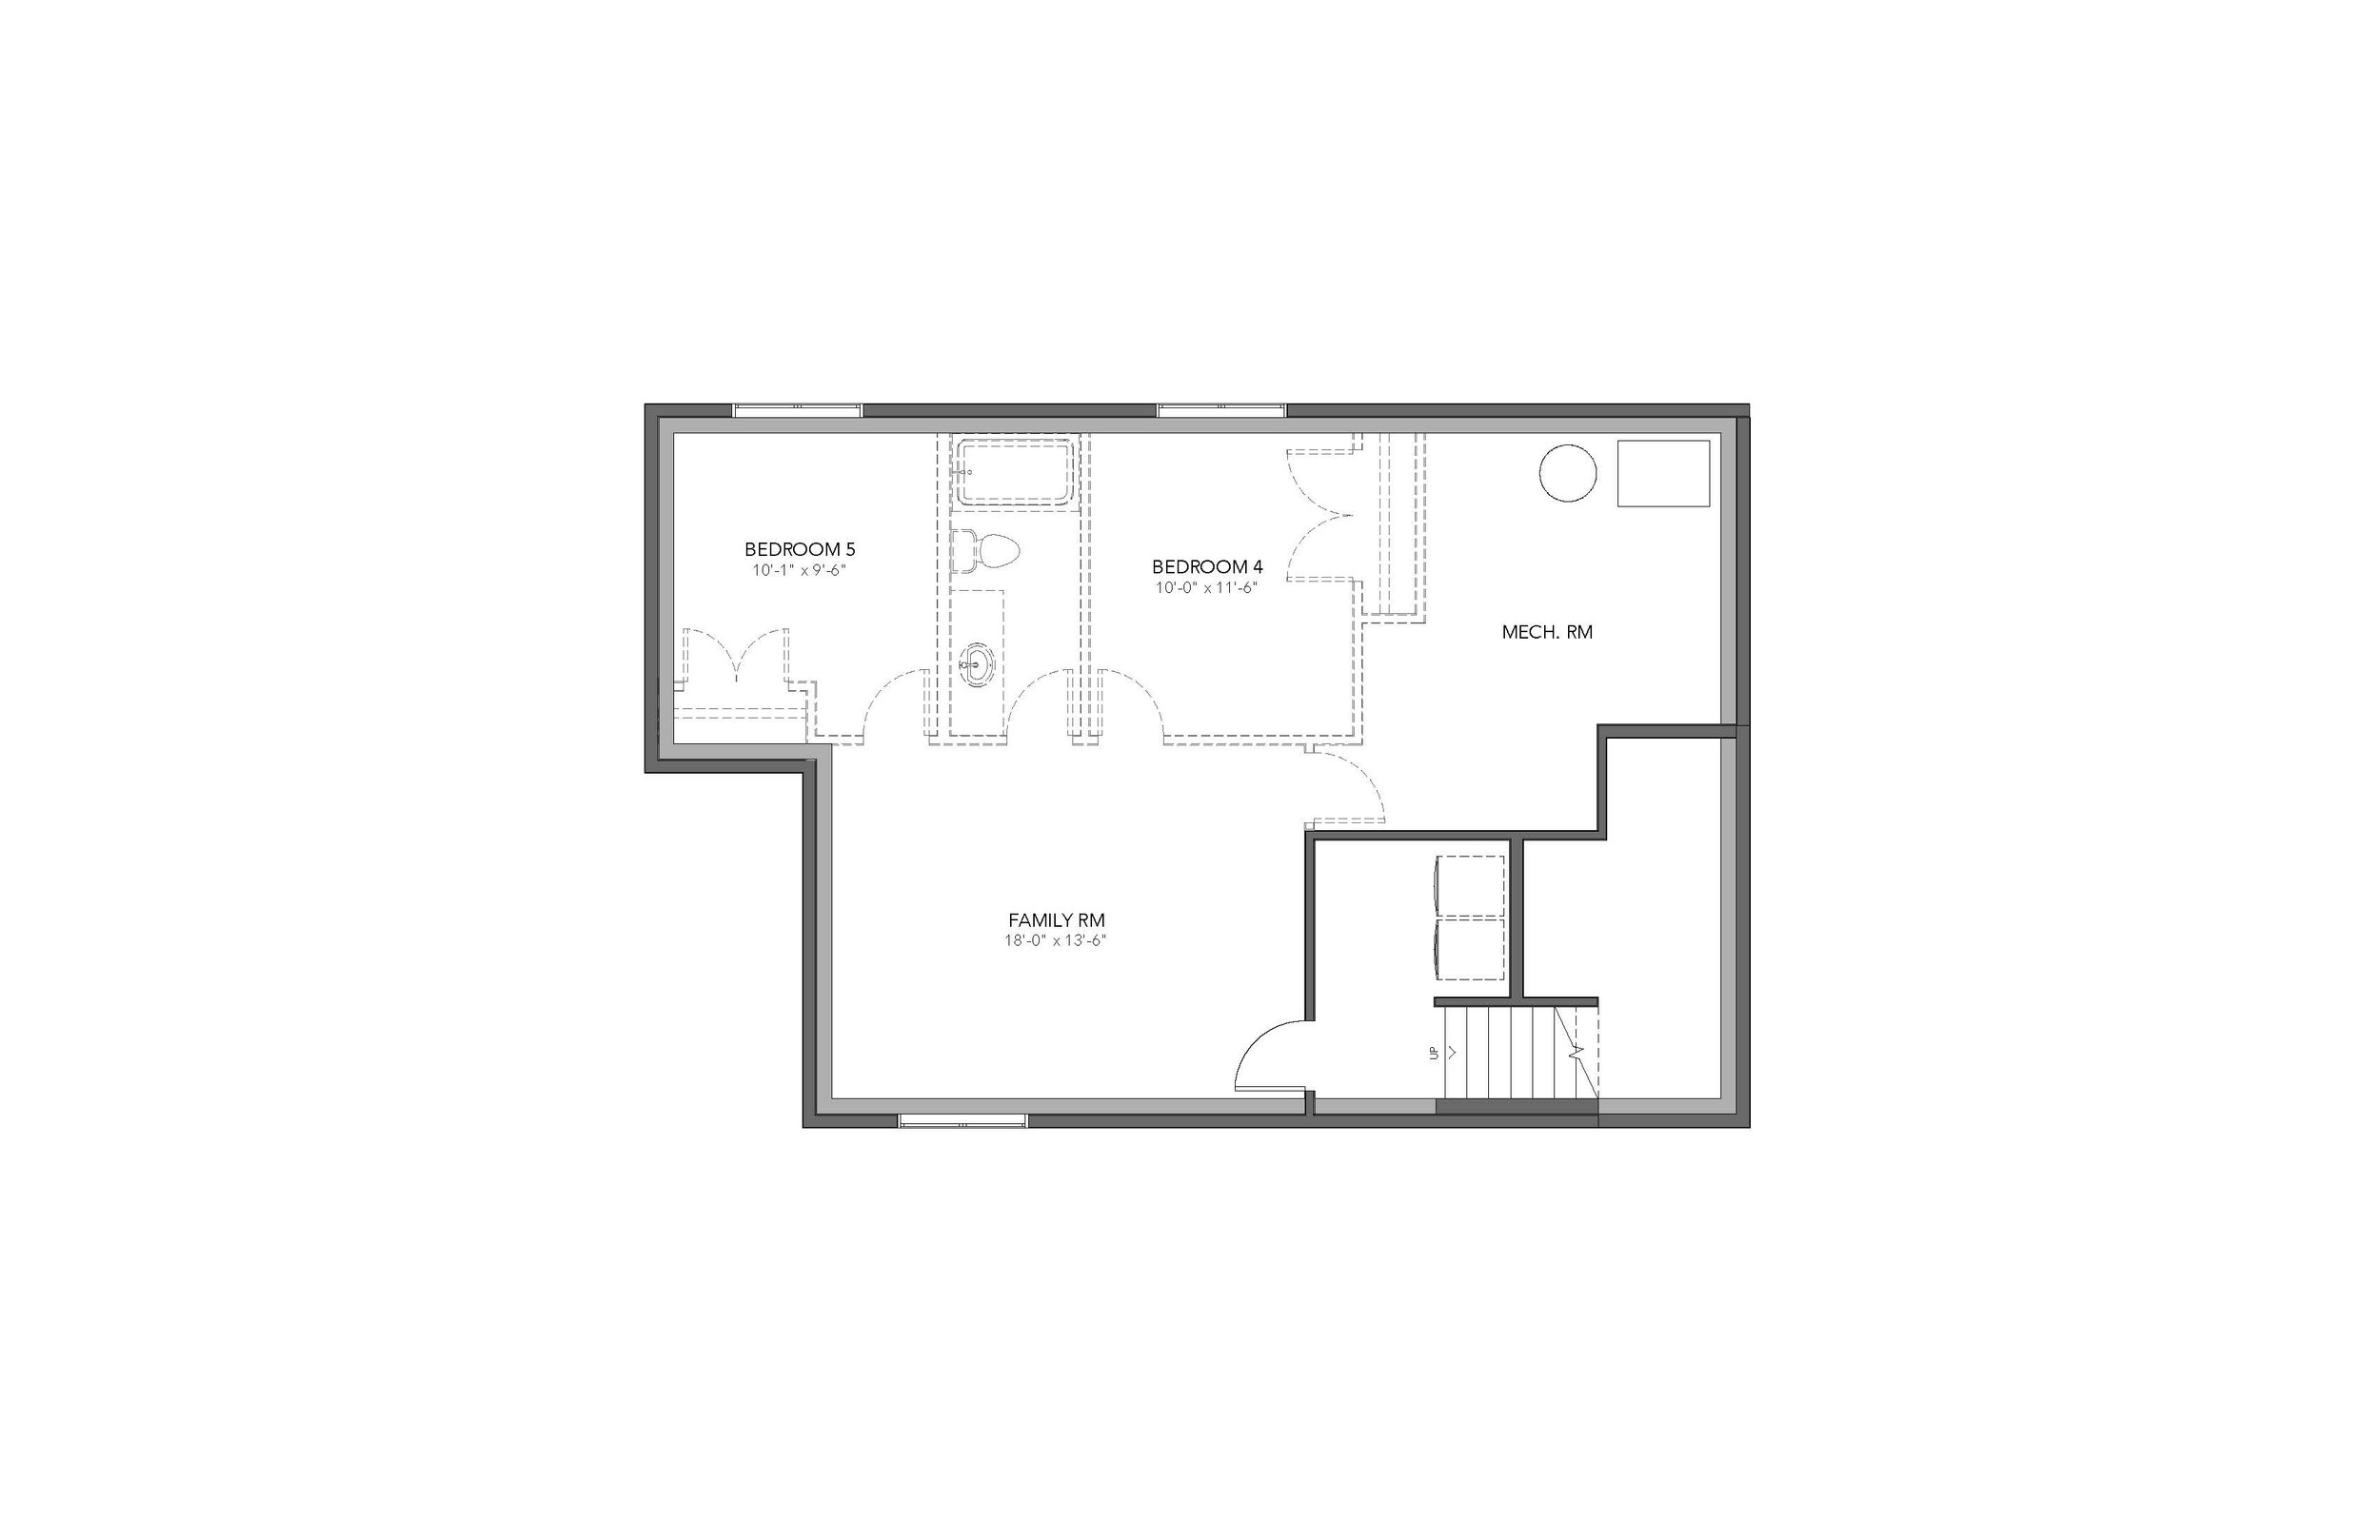 Future Lower Floor Plan (Copy)